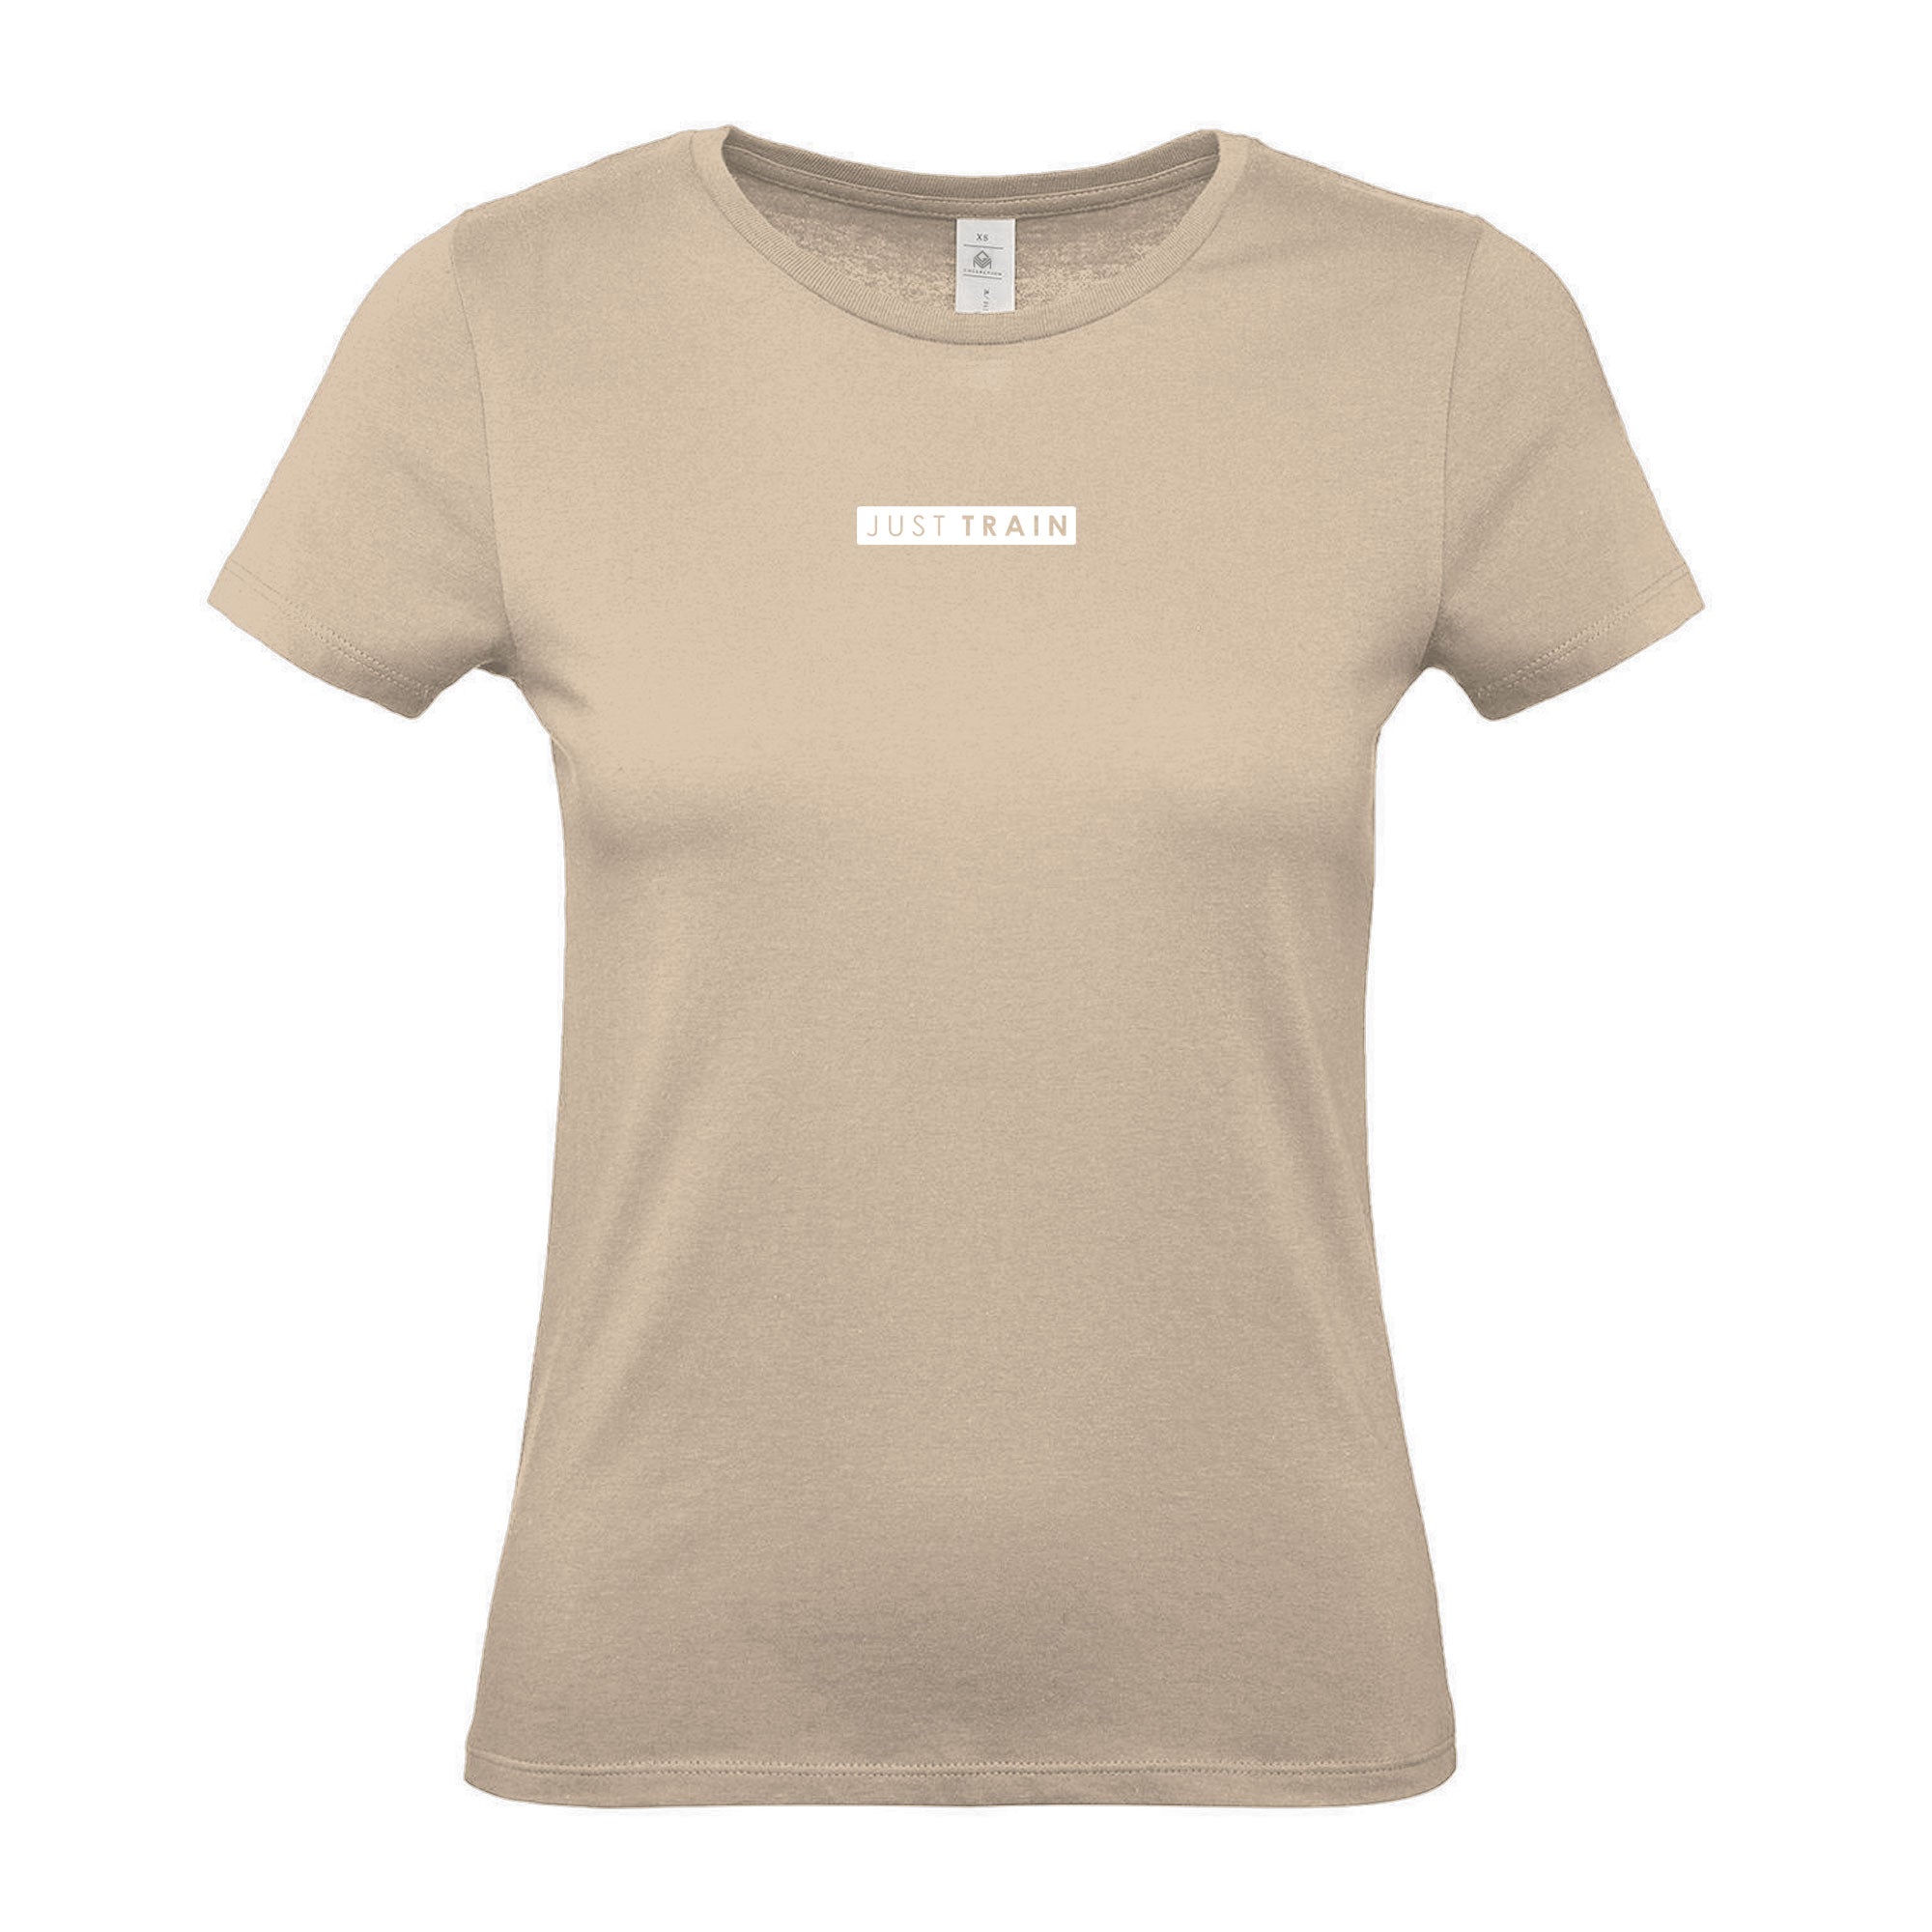 Just TRAIN - Women's Gym T-Shirt